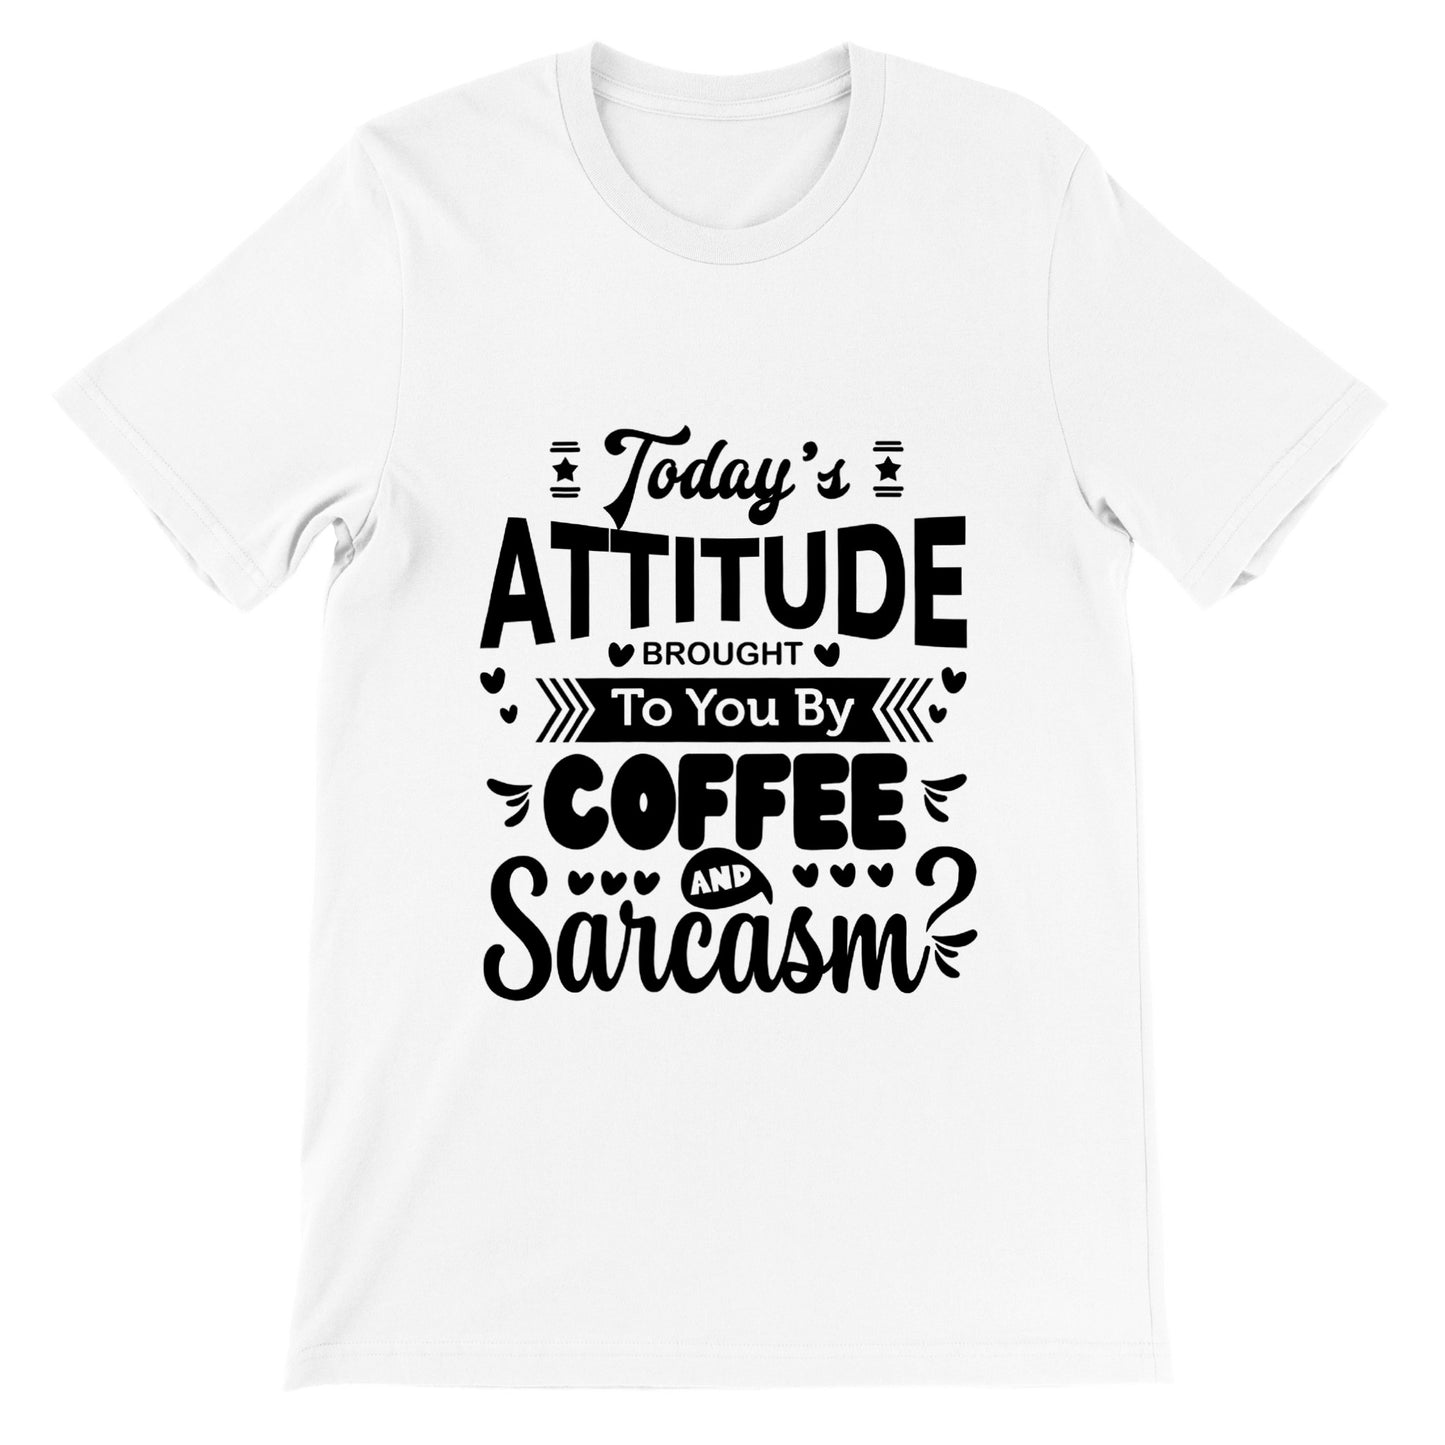 Today's Attitude - SARCASM SHIRT - Premium Unisex Crewneck T-shirt